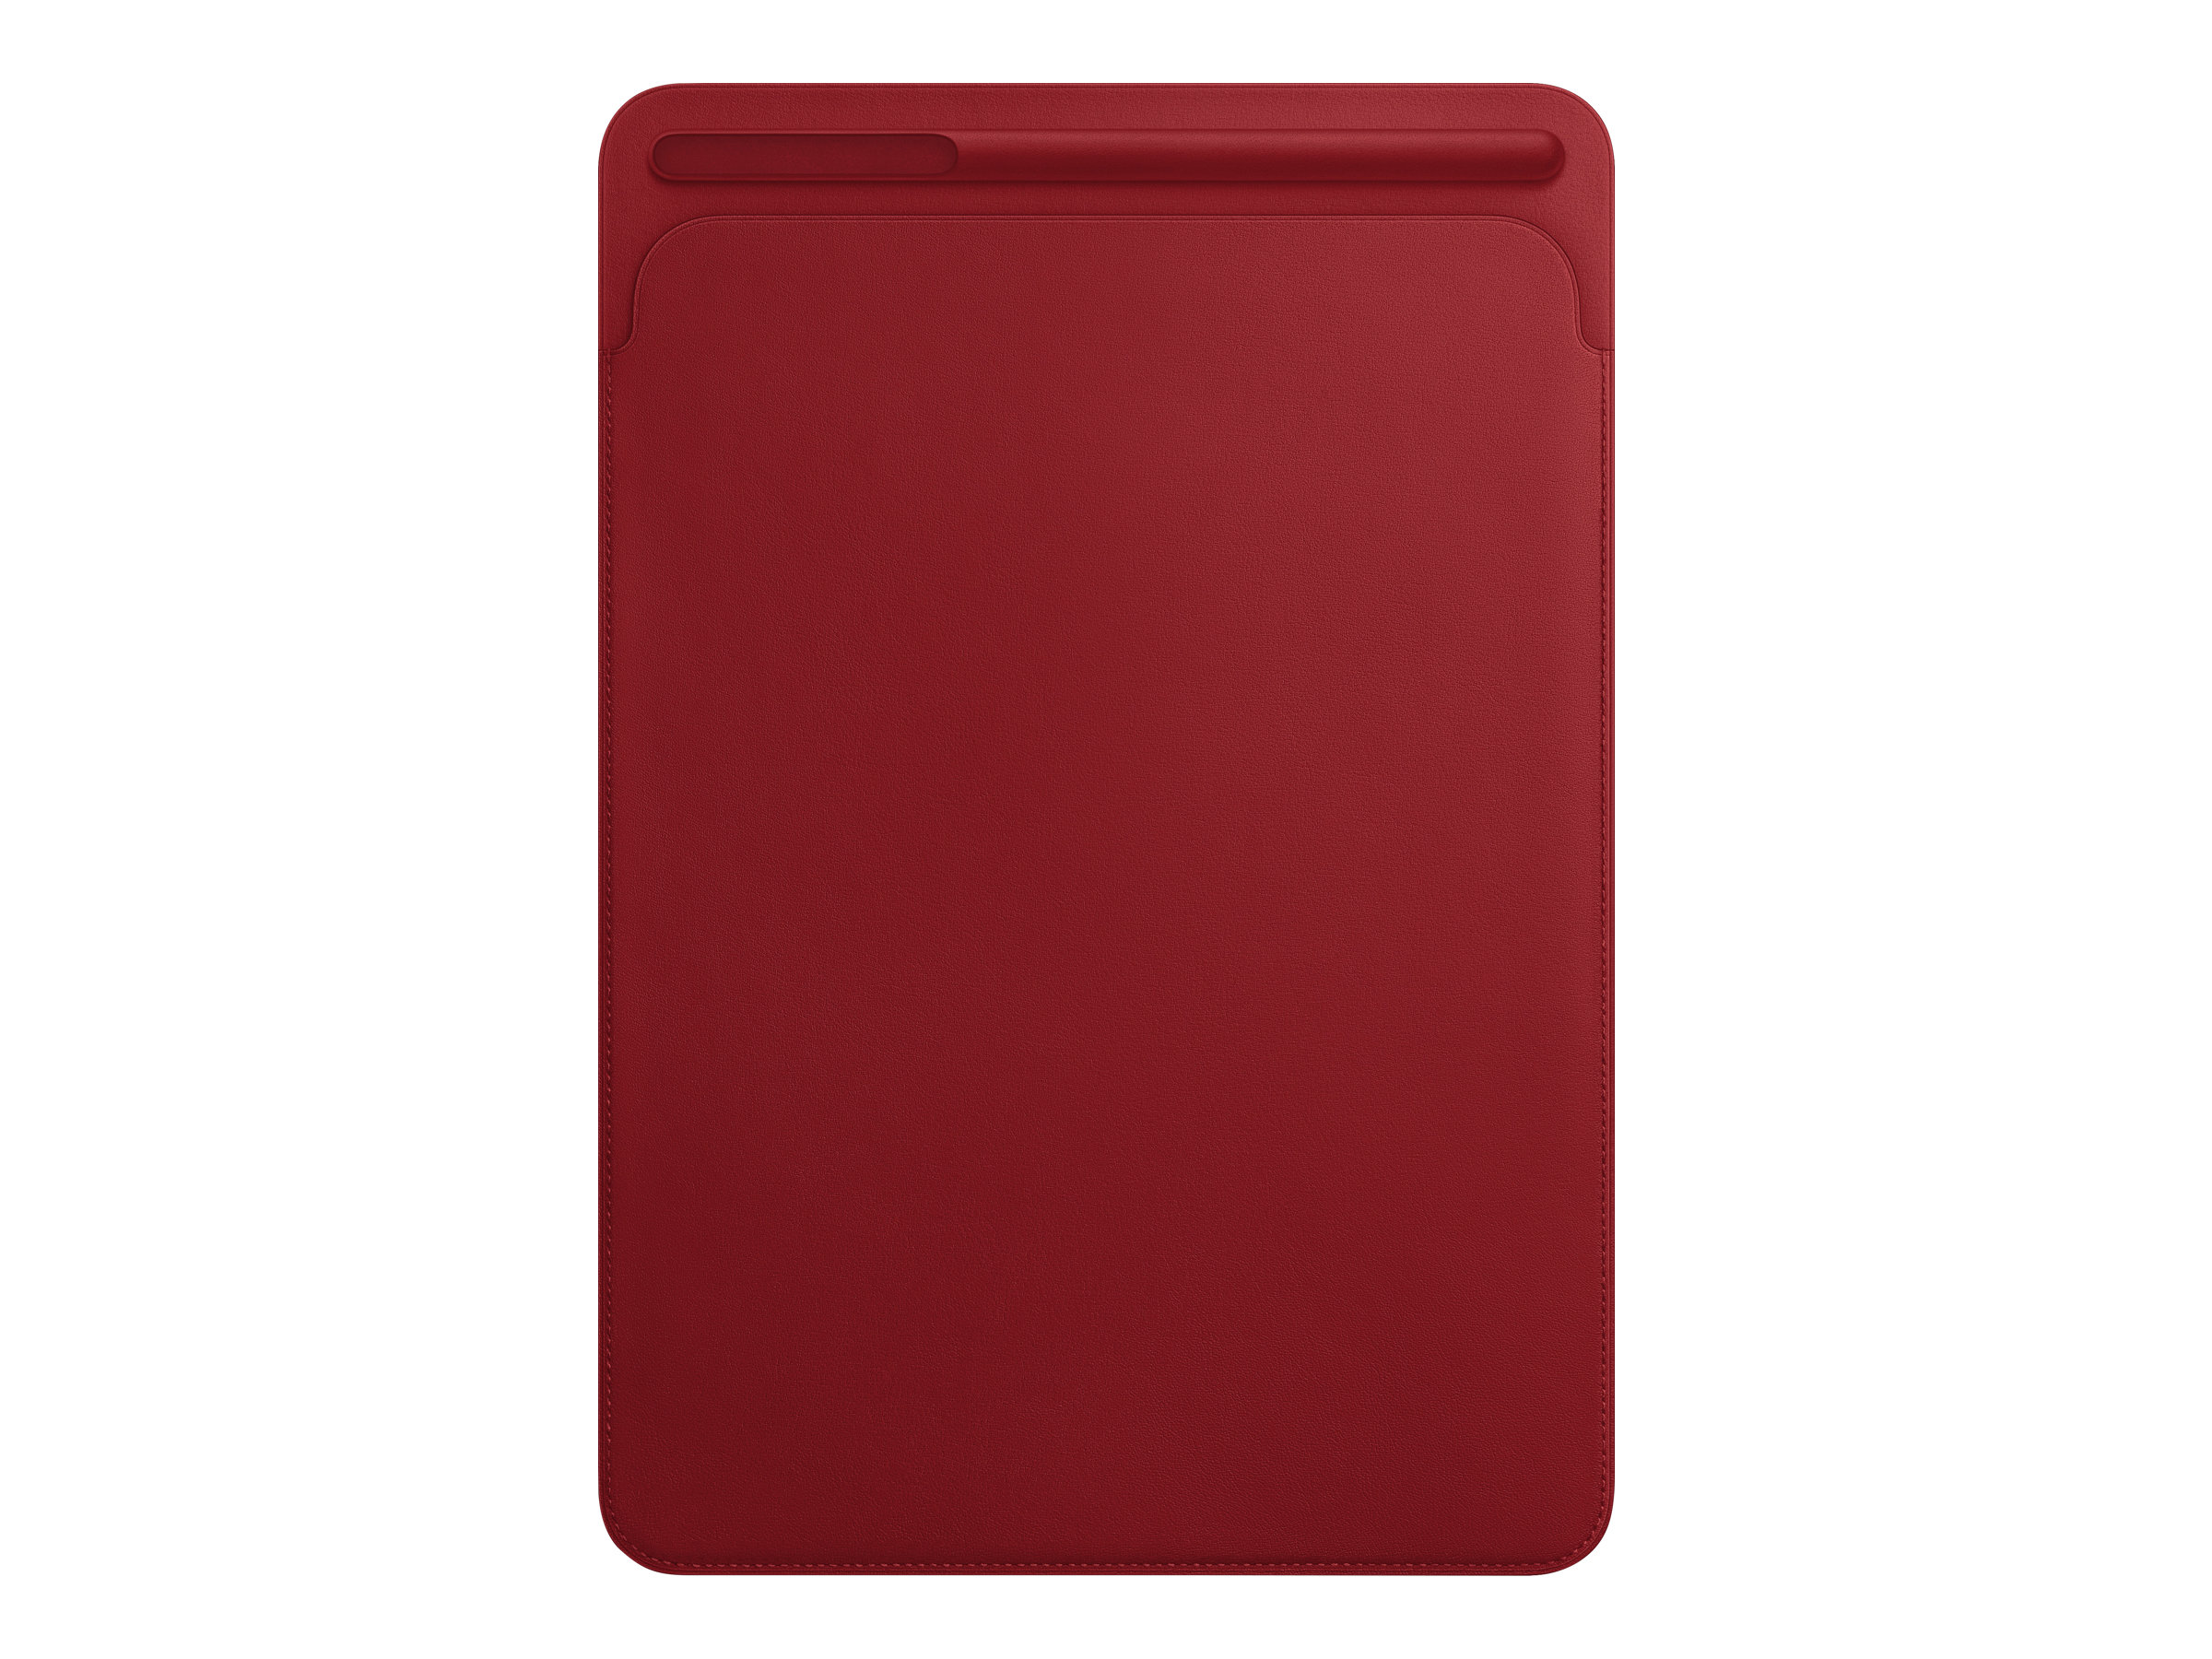 Apple - (PRODUCT) RED - Schutzhlle fr Tablet - Leder - Rot - 10.5